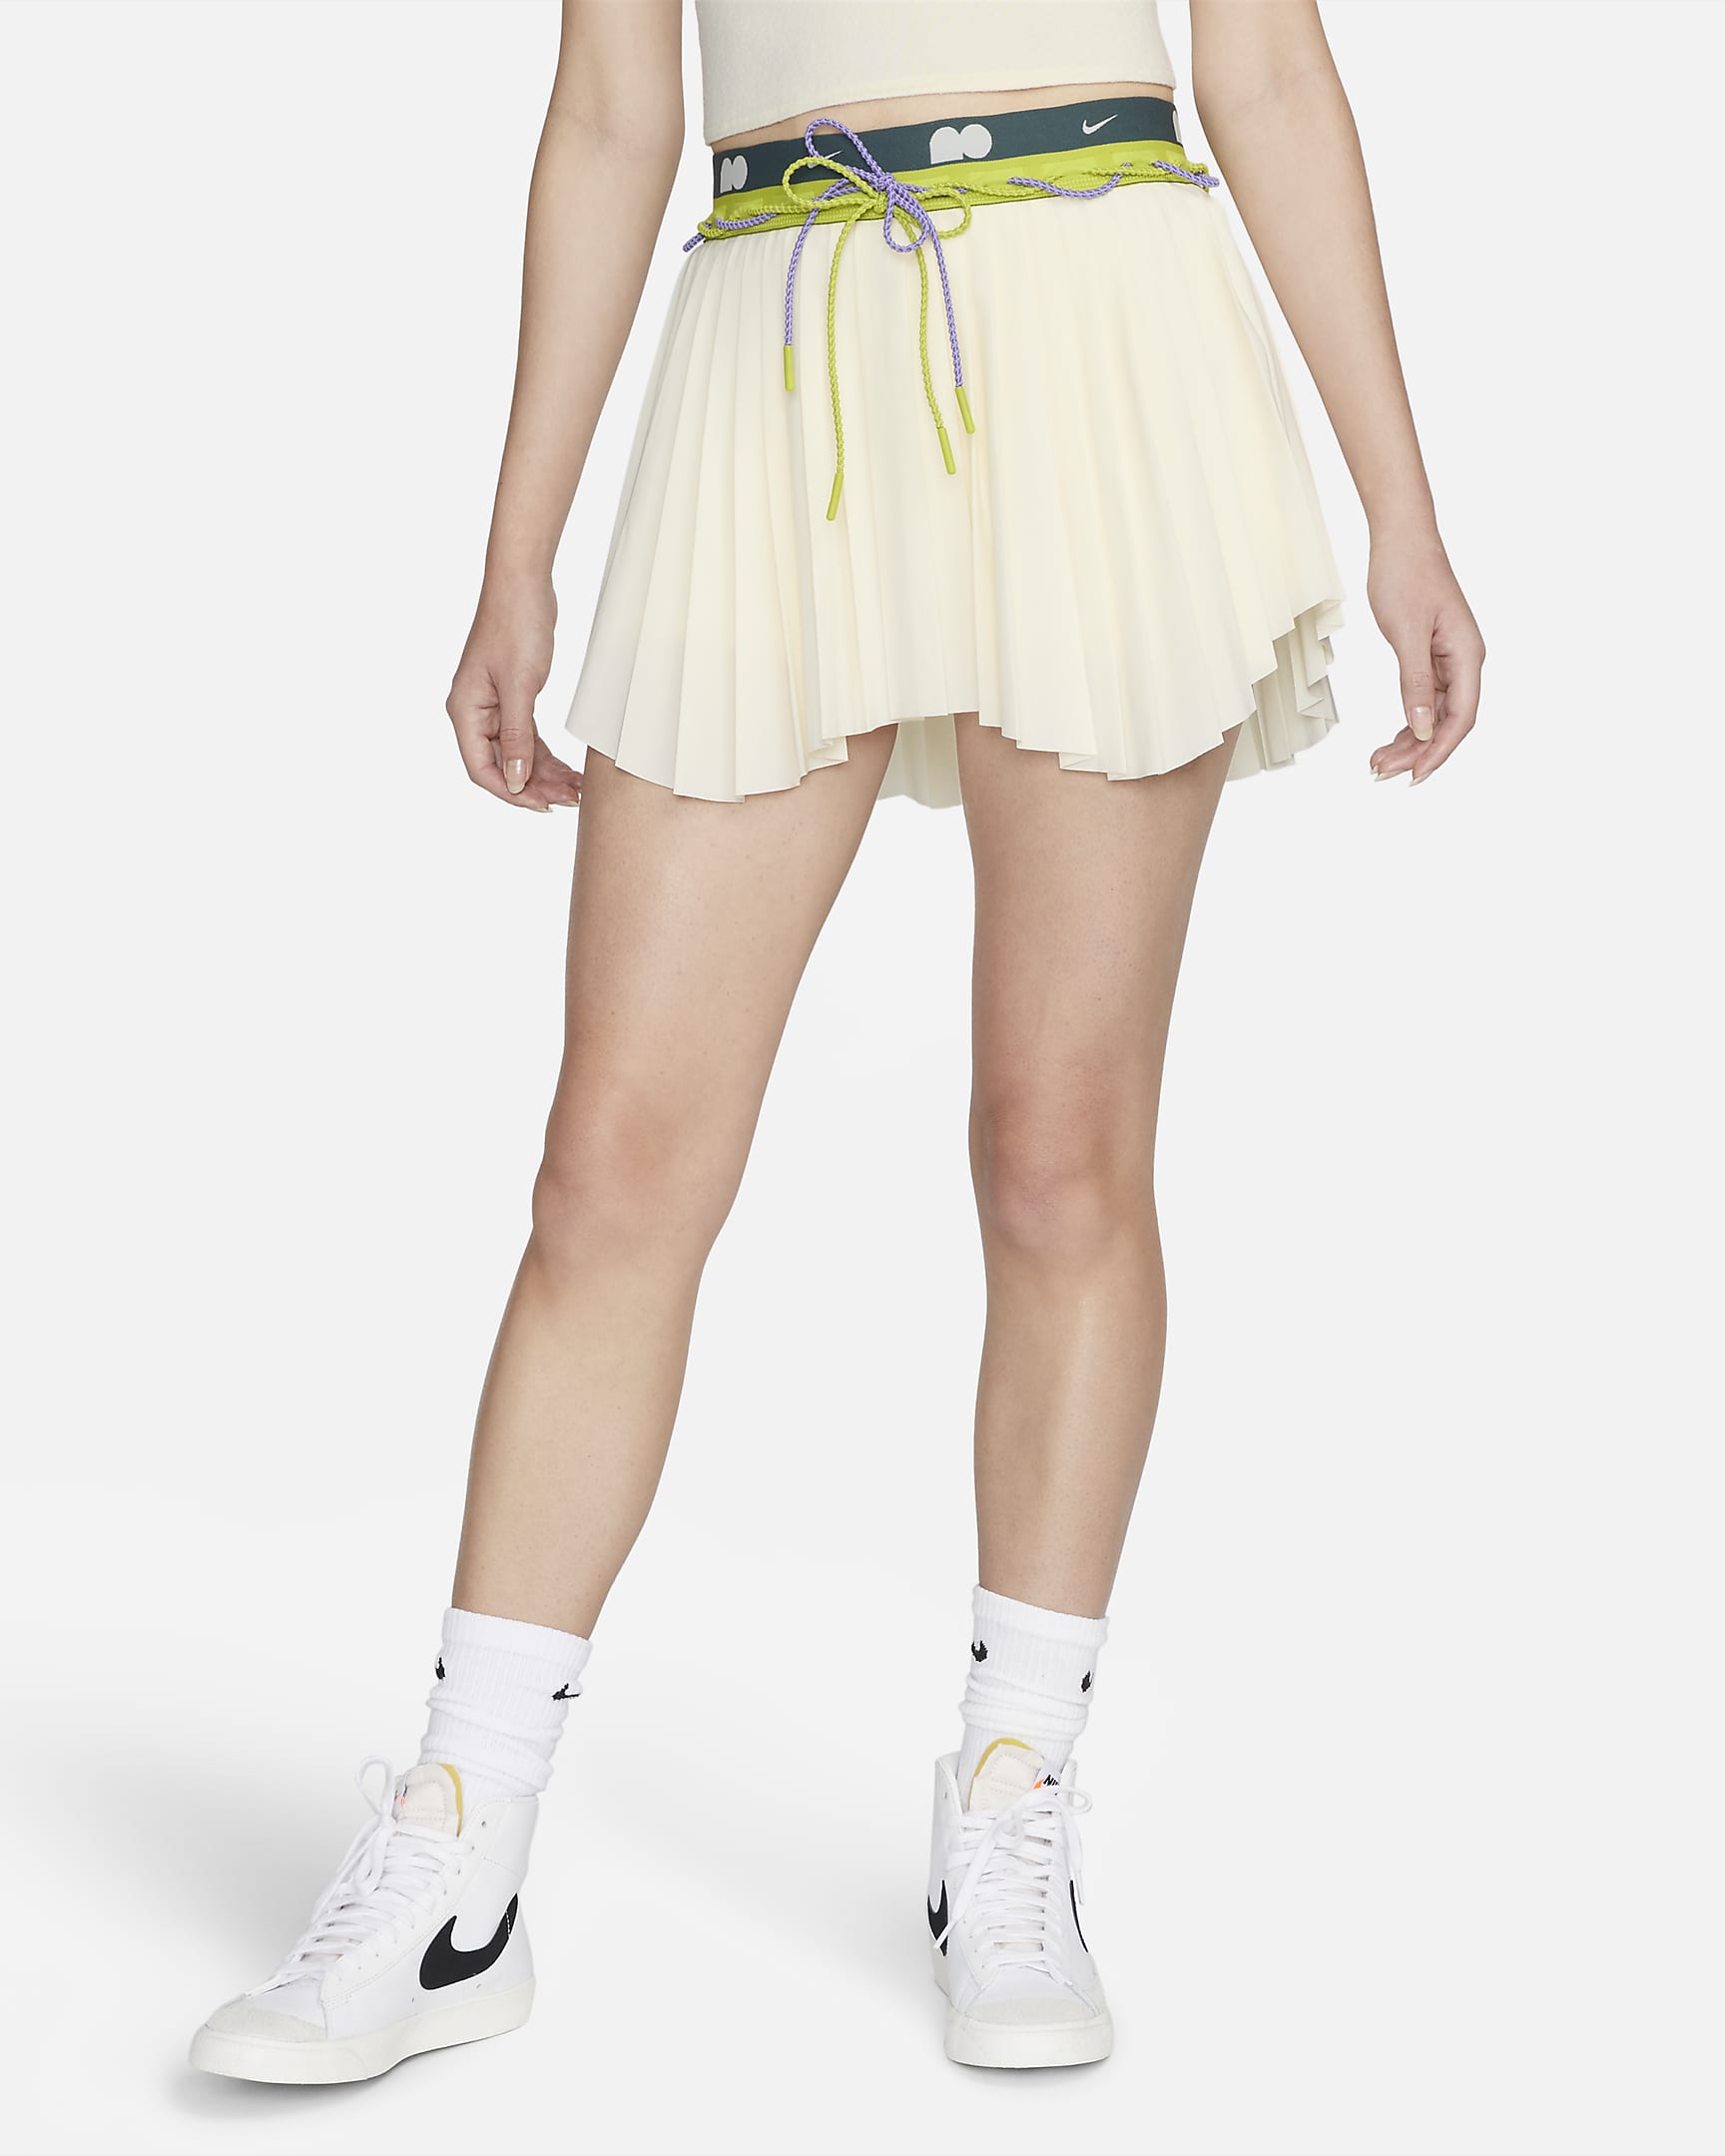 Naomi Osaka Women's Skirt. Nike SG